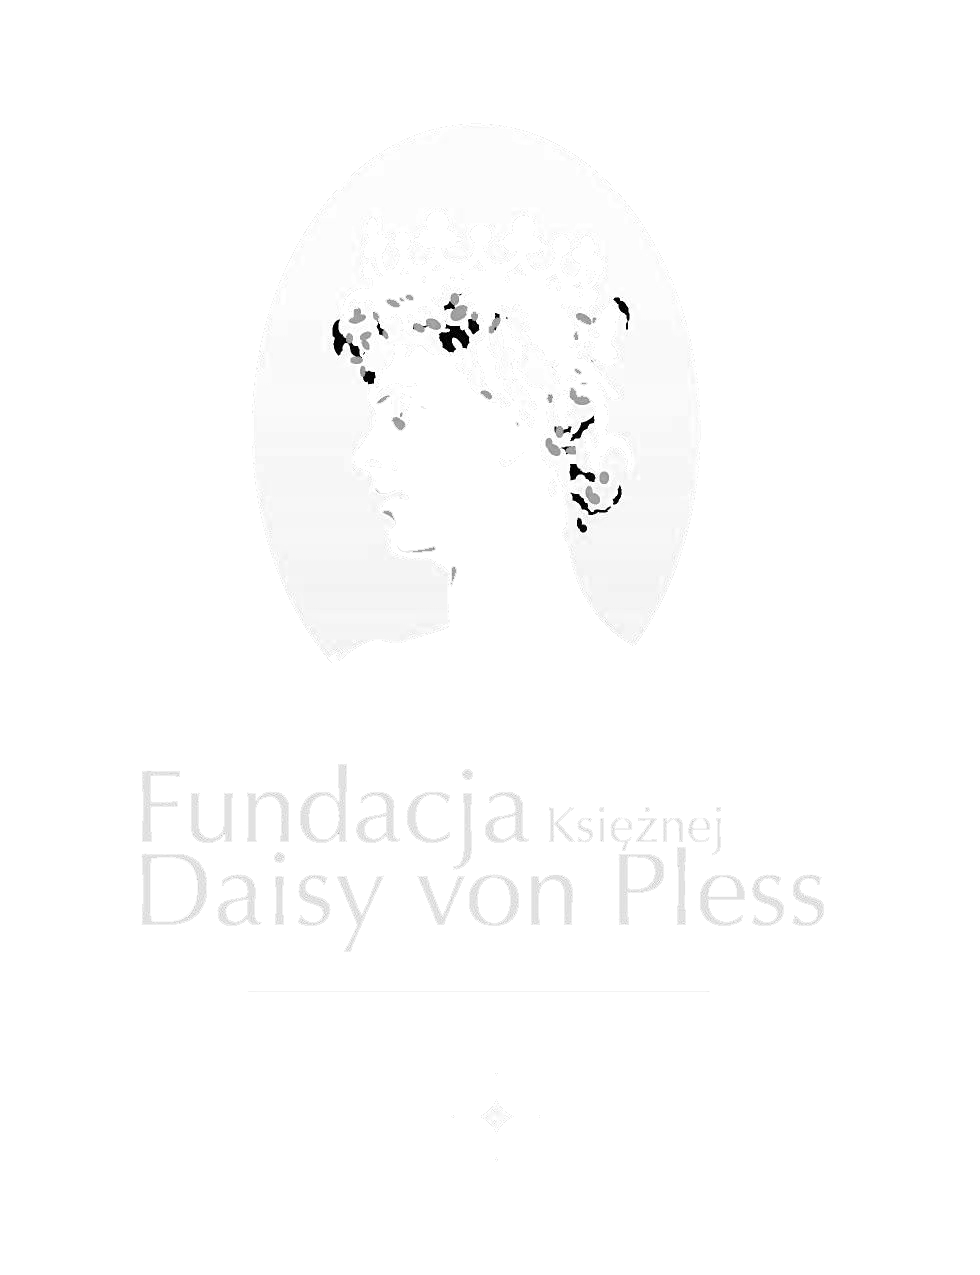 Fundacja Daisy von Pless